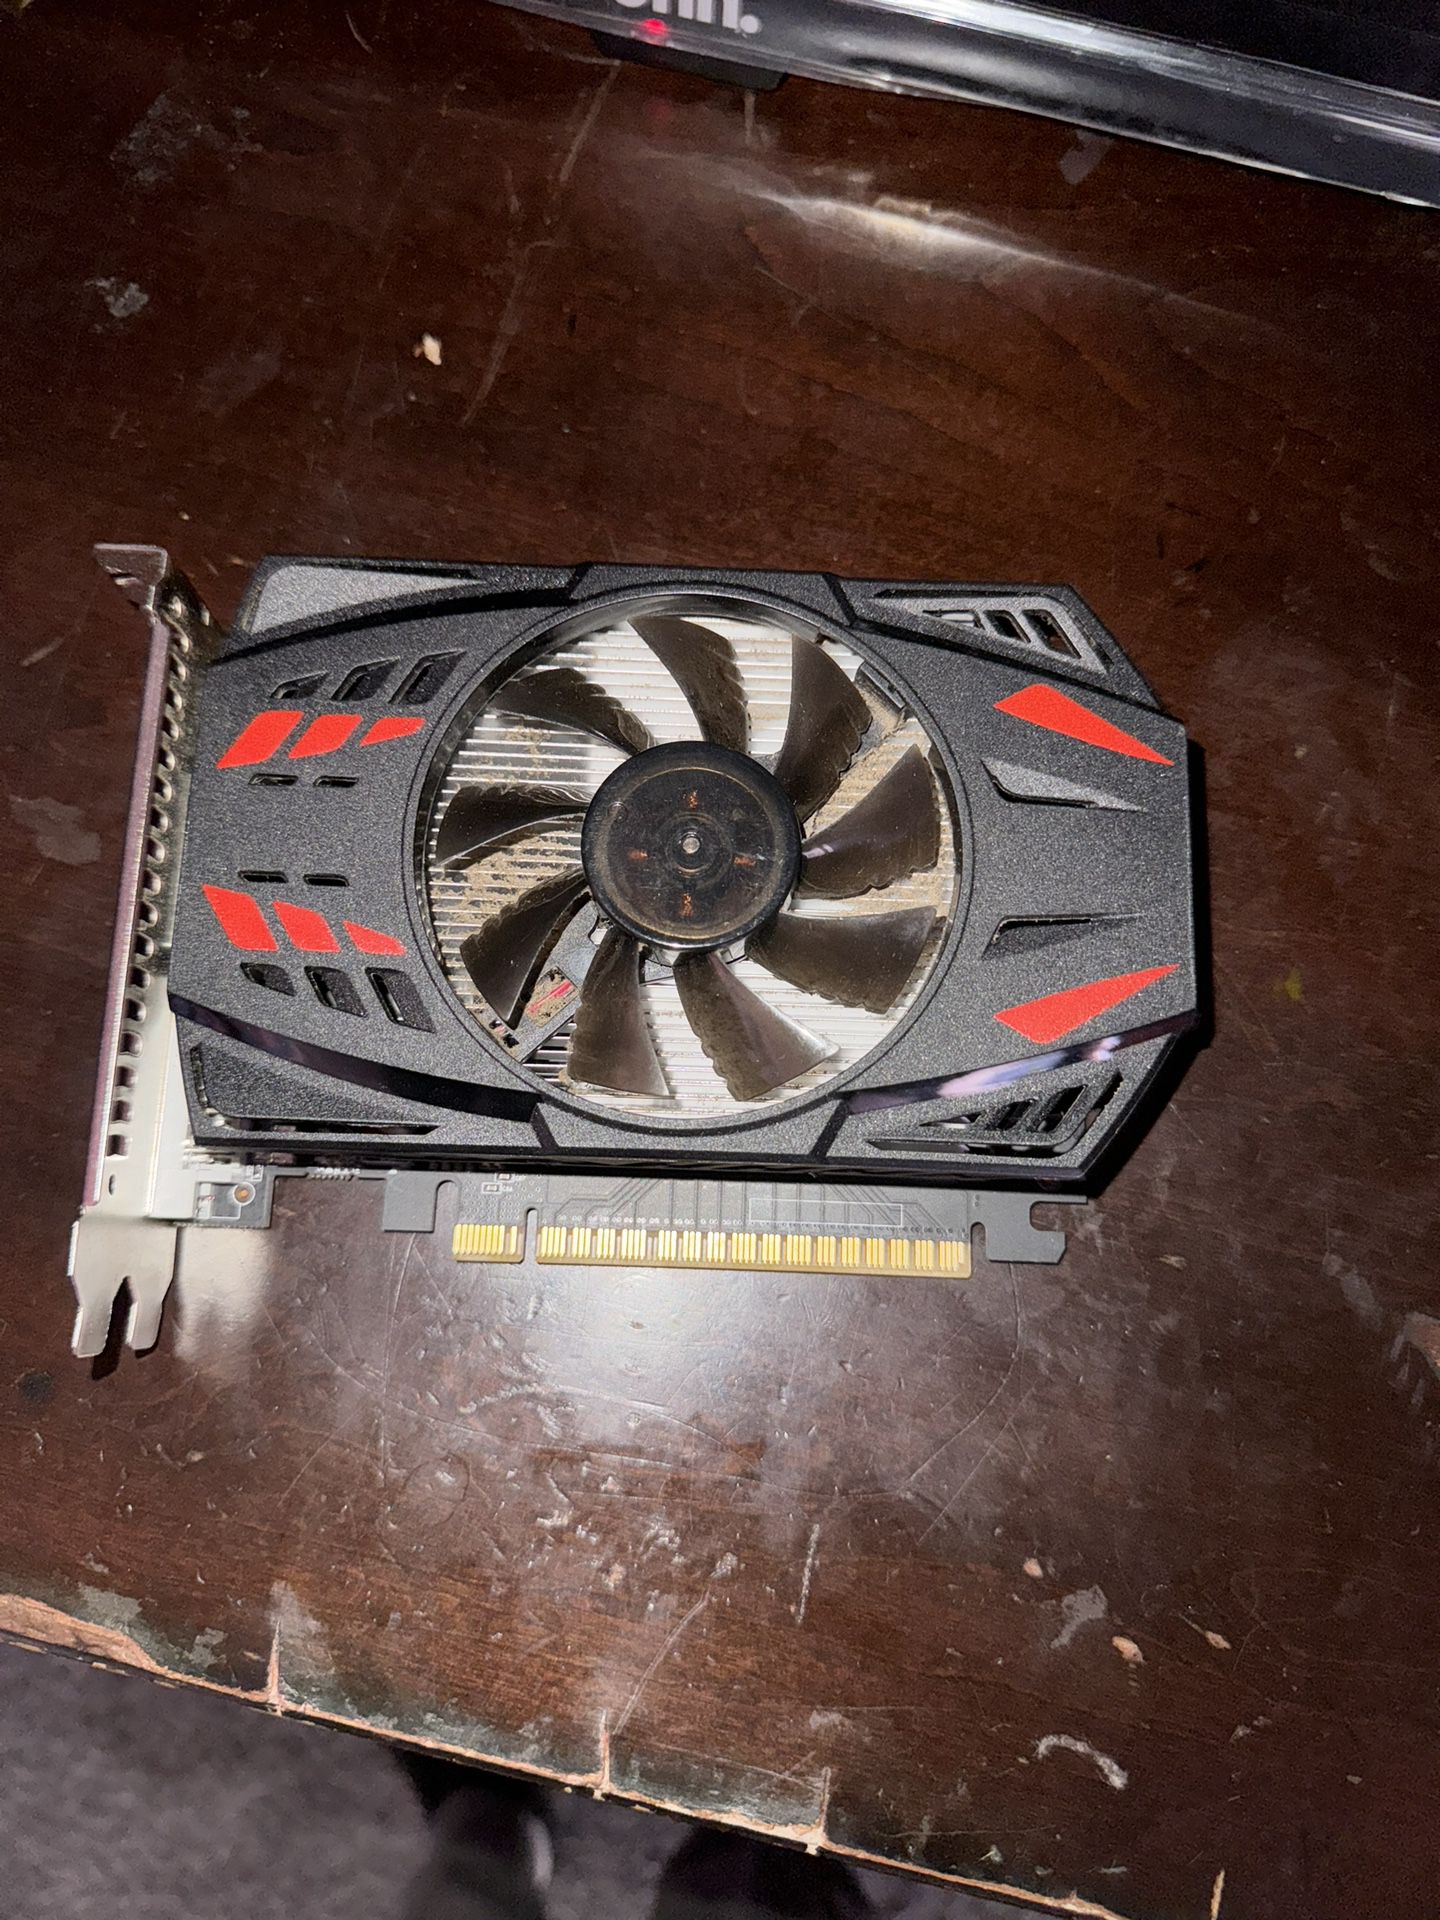 NVIDIA GeForce GTX 650 